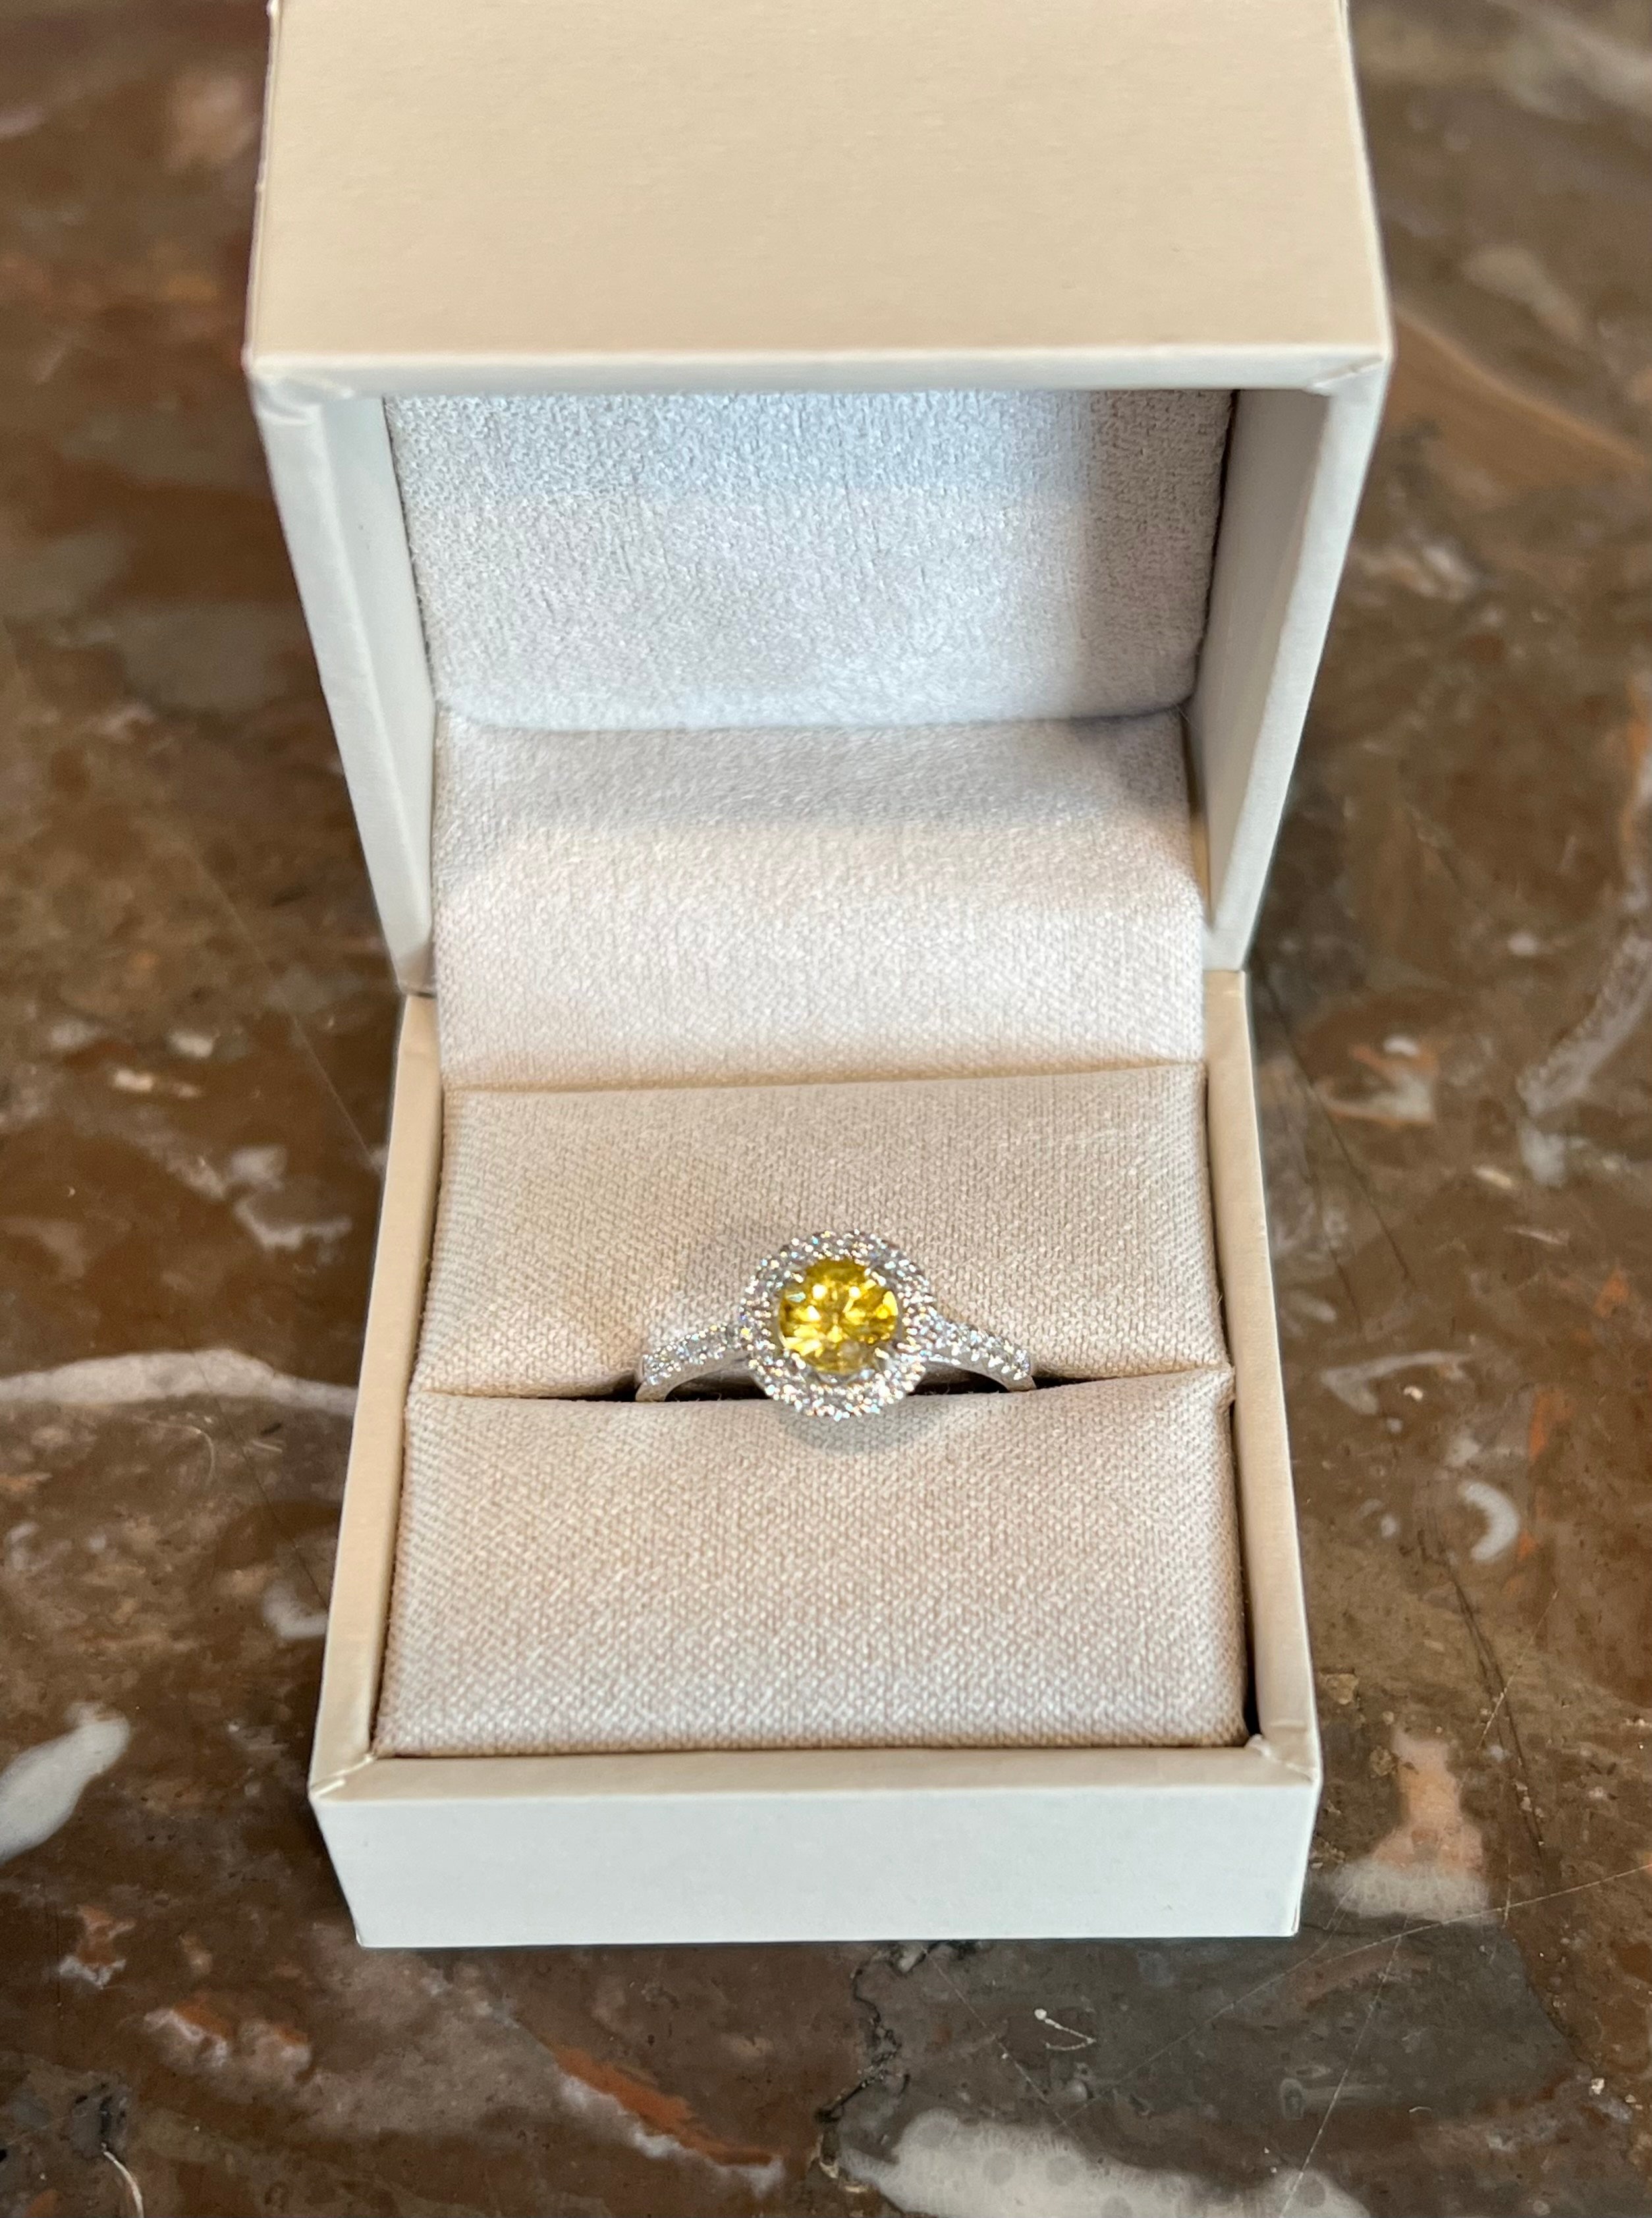 0.67 Carats Yellow Sapphire Diamonds 18 Carat White Gold Marguerite Ring